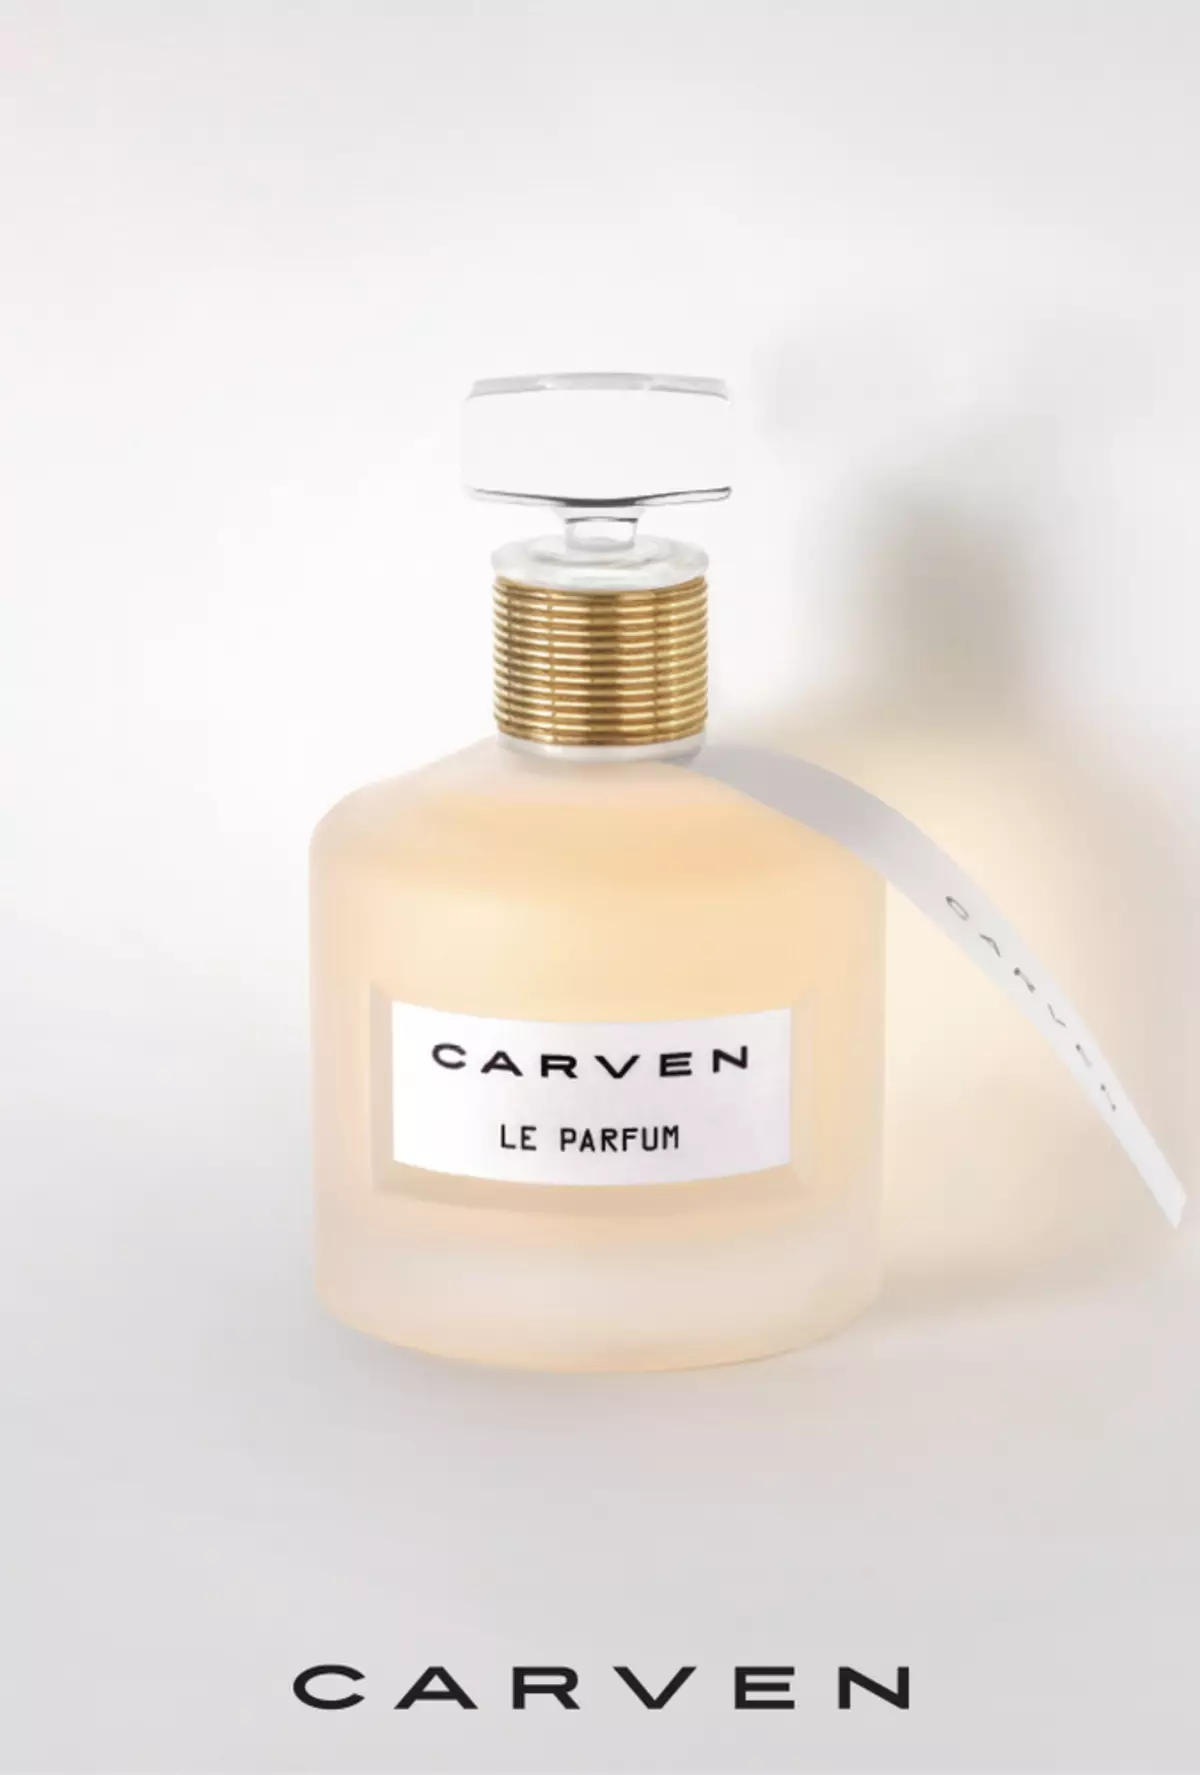 Perfume Carven: Perfume Wanita Le Parfum, L'Eau De Toilette Toilette dan Dans Ma Bulle, Air Perfumery Untuk Lelaki 25267_4